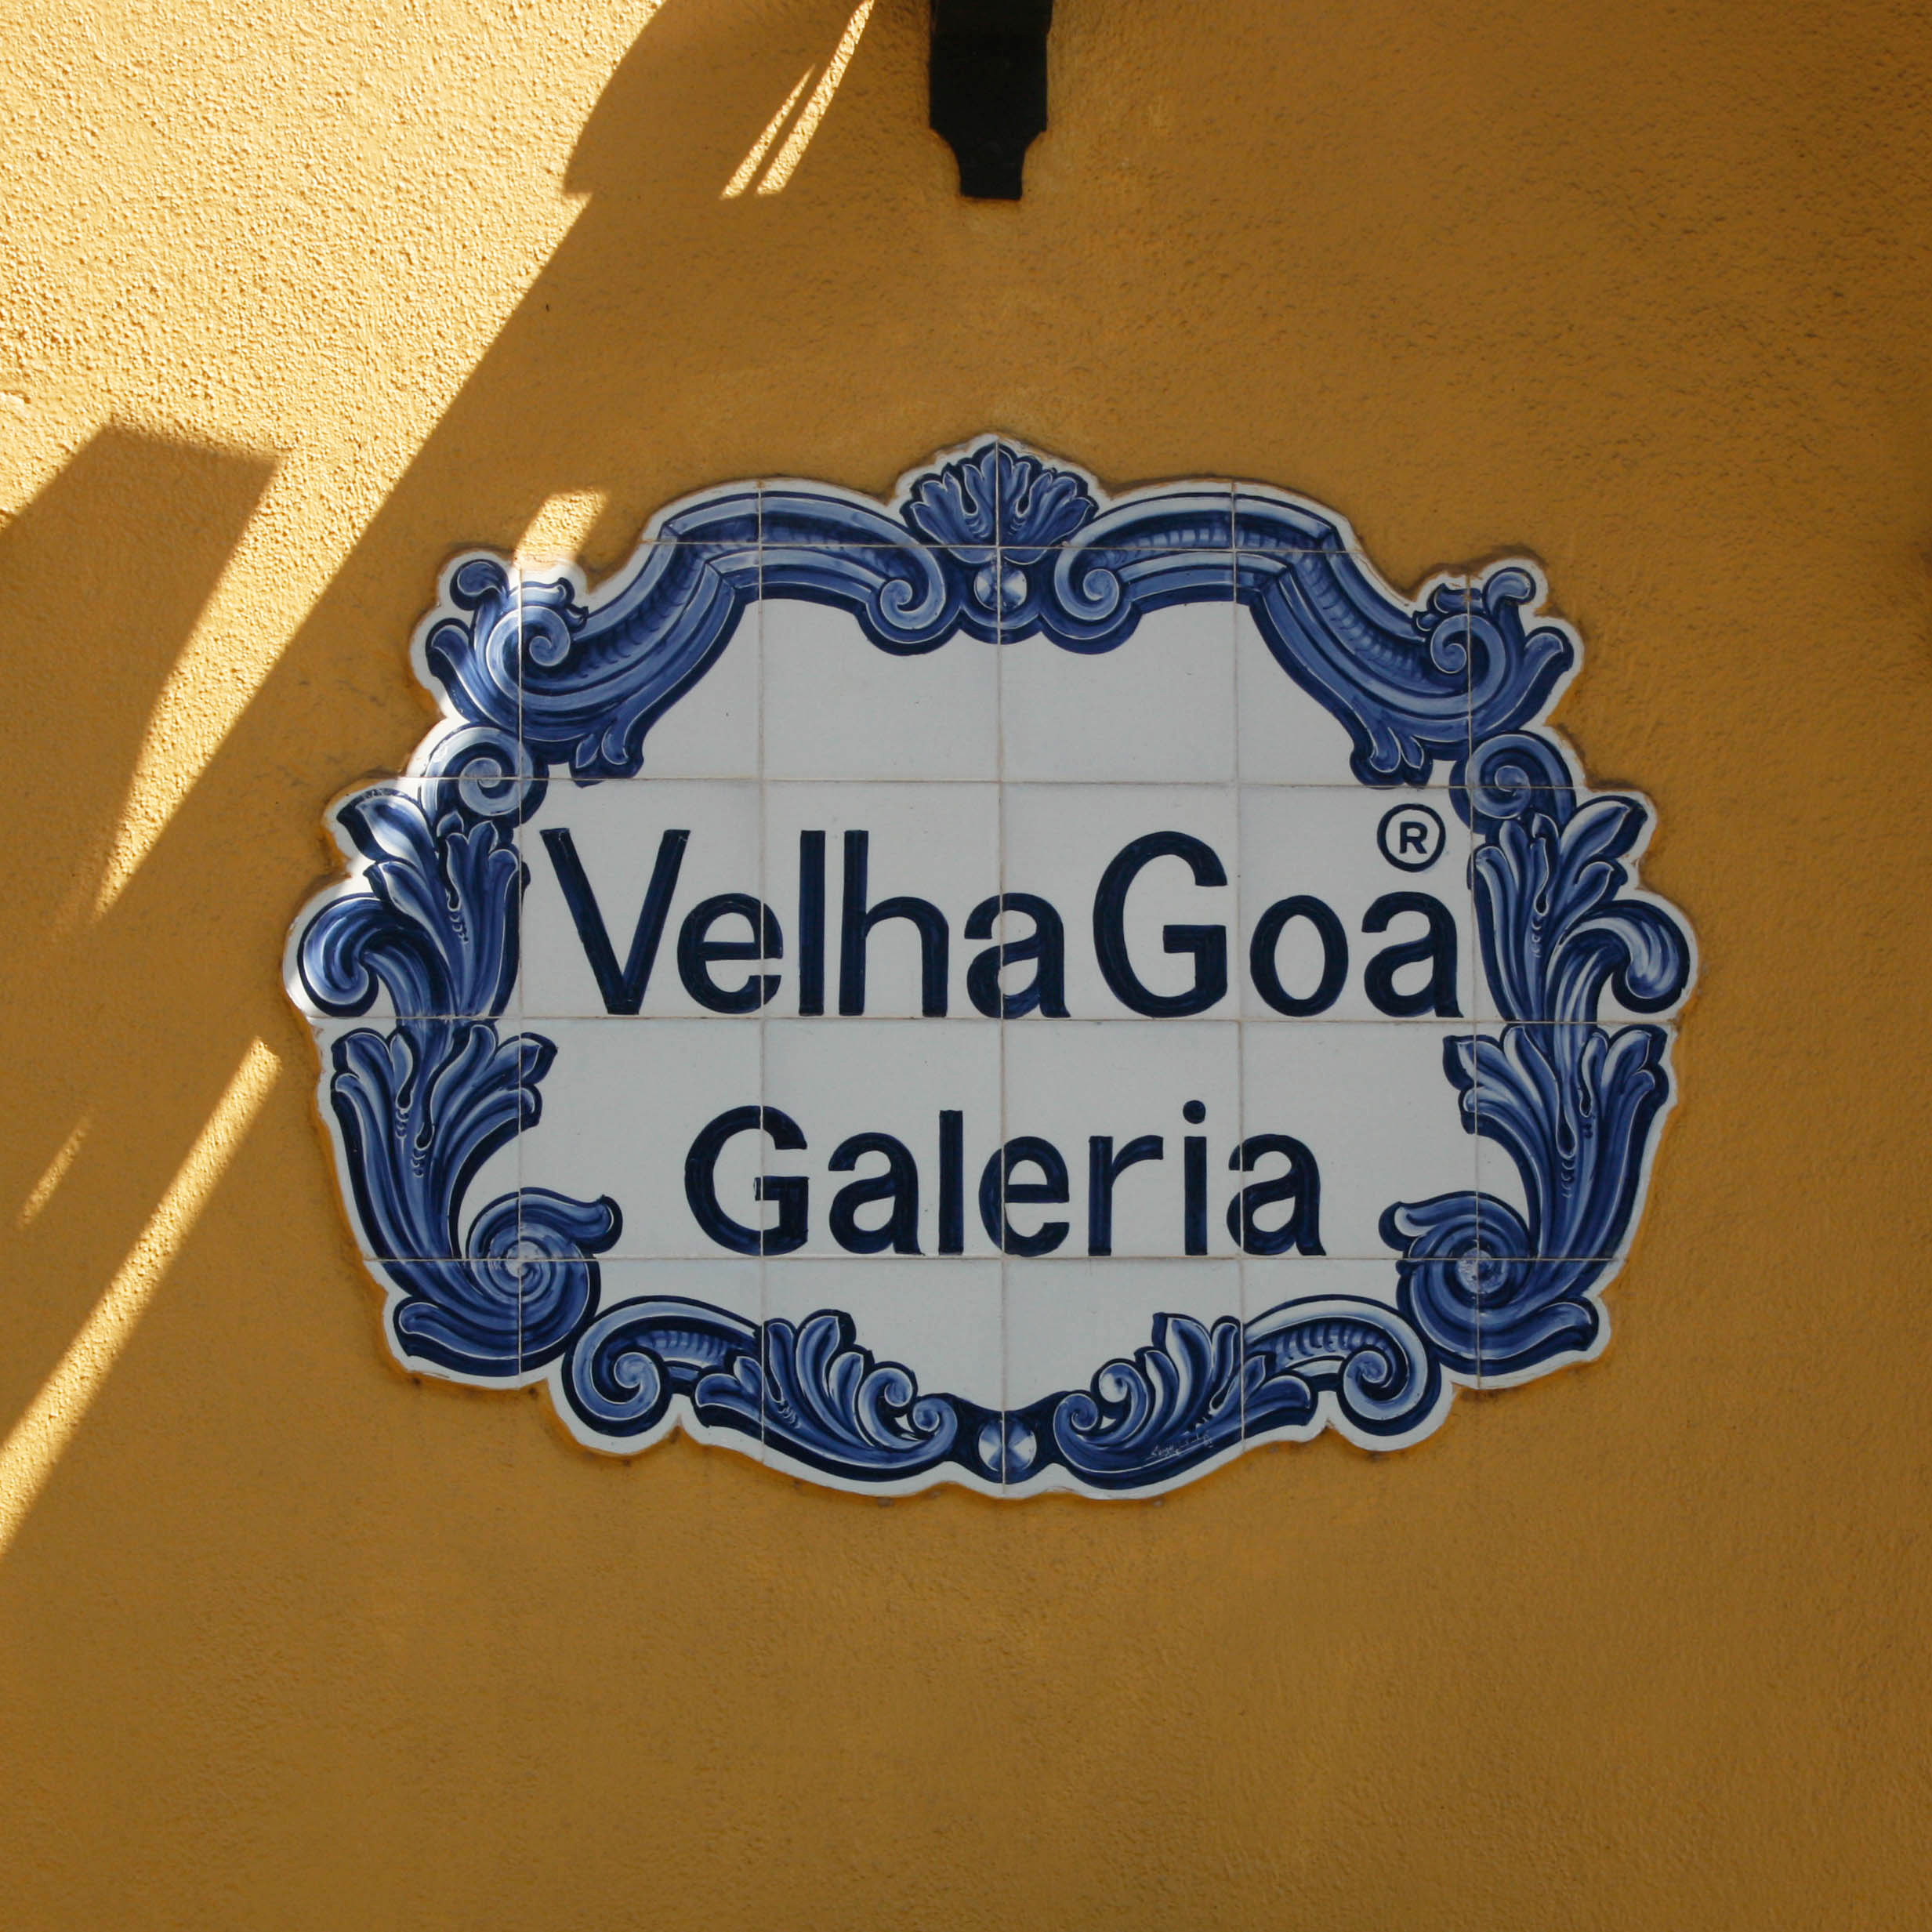 Velha Goa Galeria